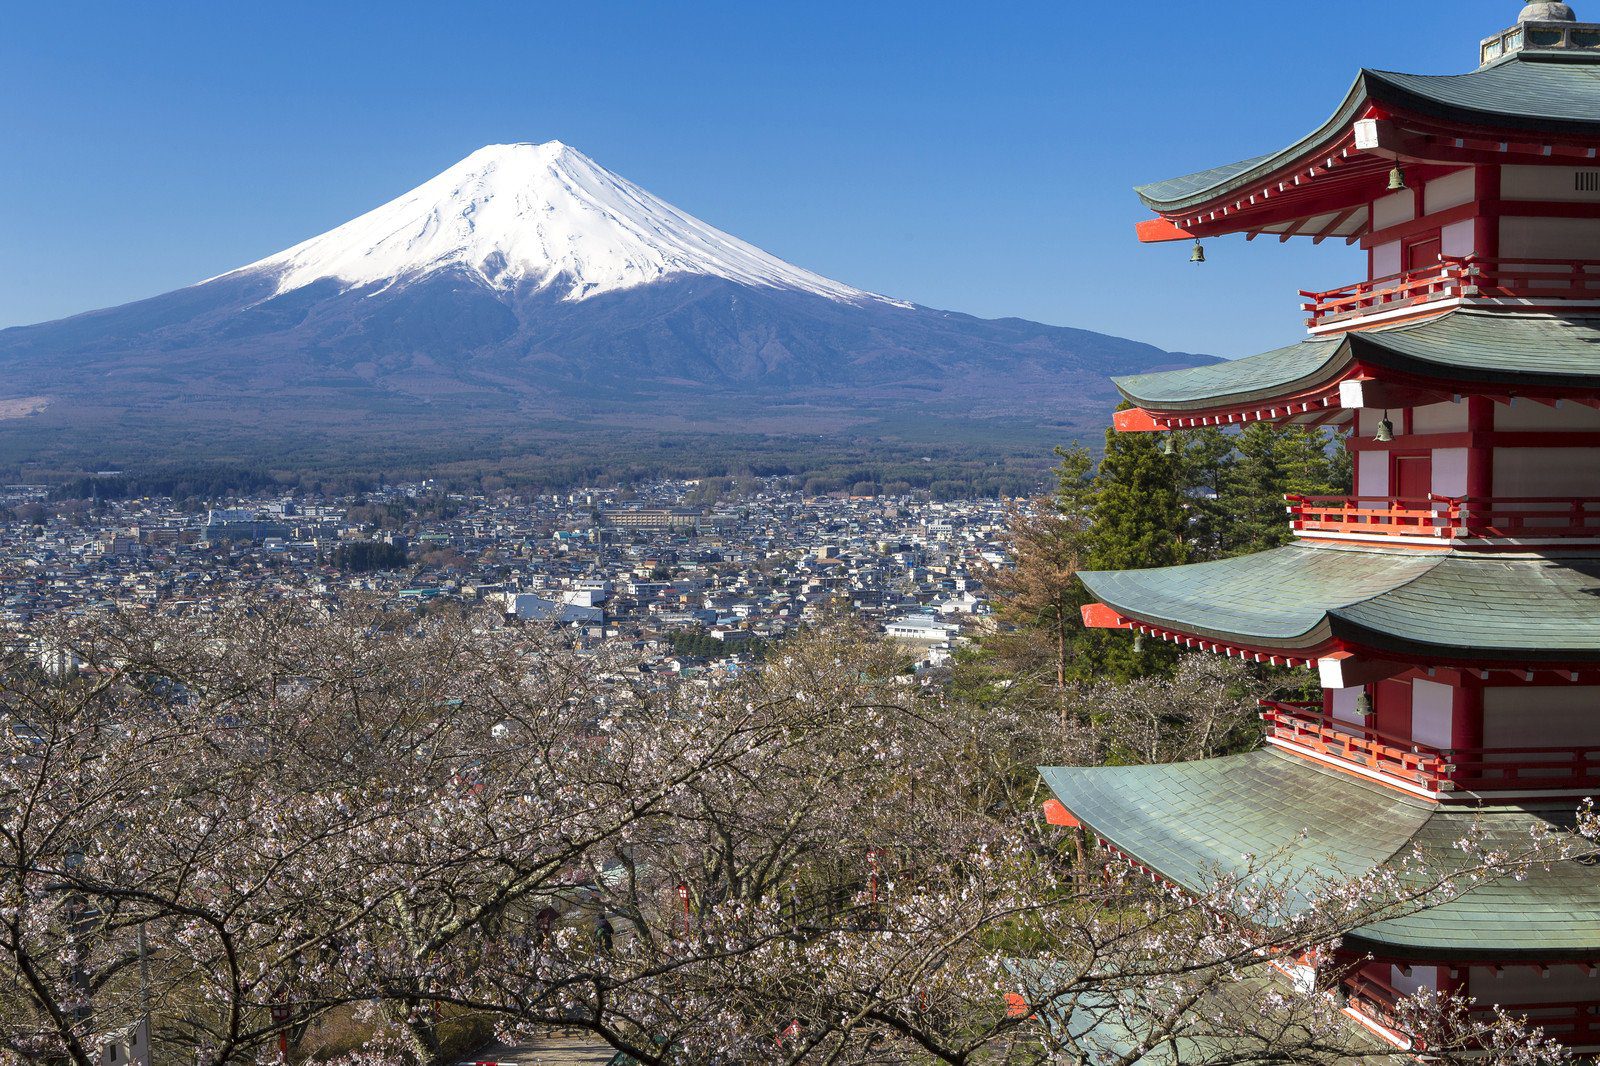 Mt. Fuji viewed from Chureito Pagoda in Japan